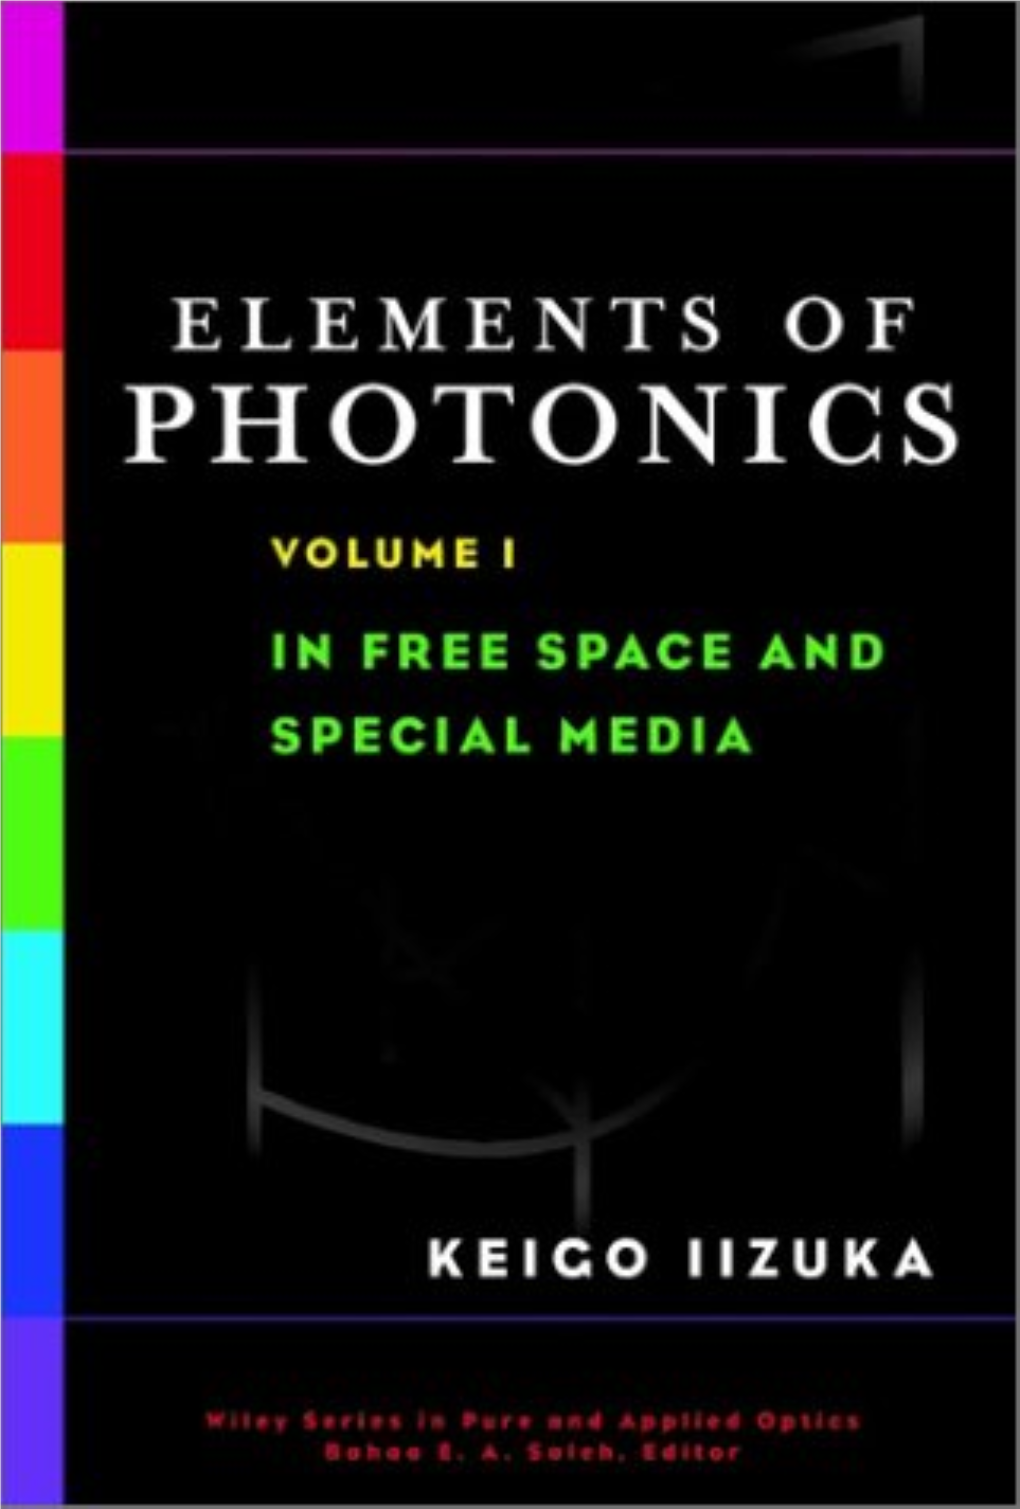 Elements-Of-Photonics-Volume-1.Pdf